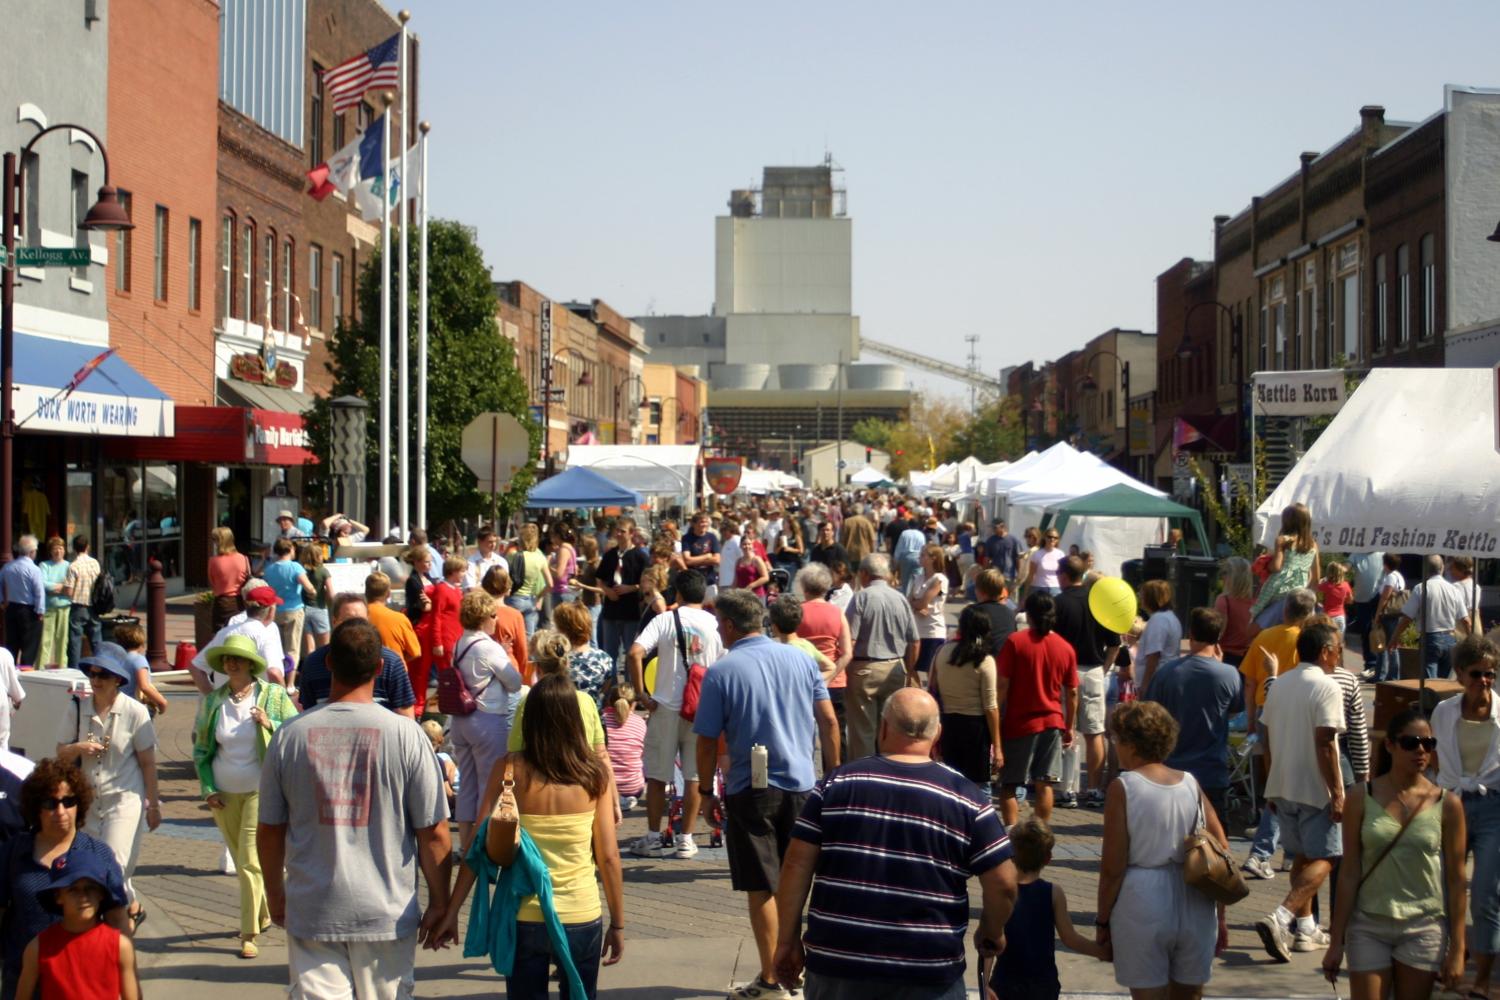 A street festival in Ames Iowa at their Main Street Cultural District